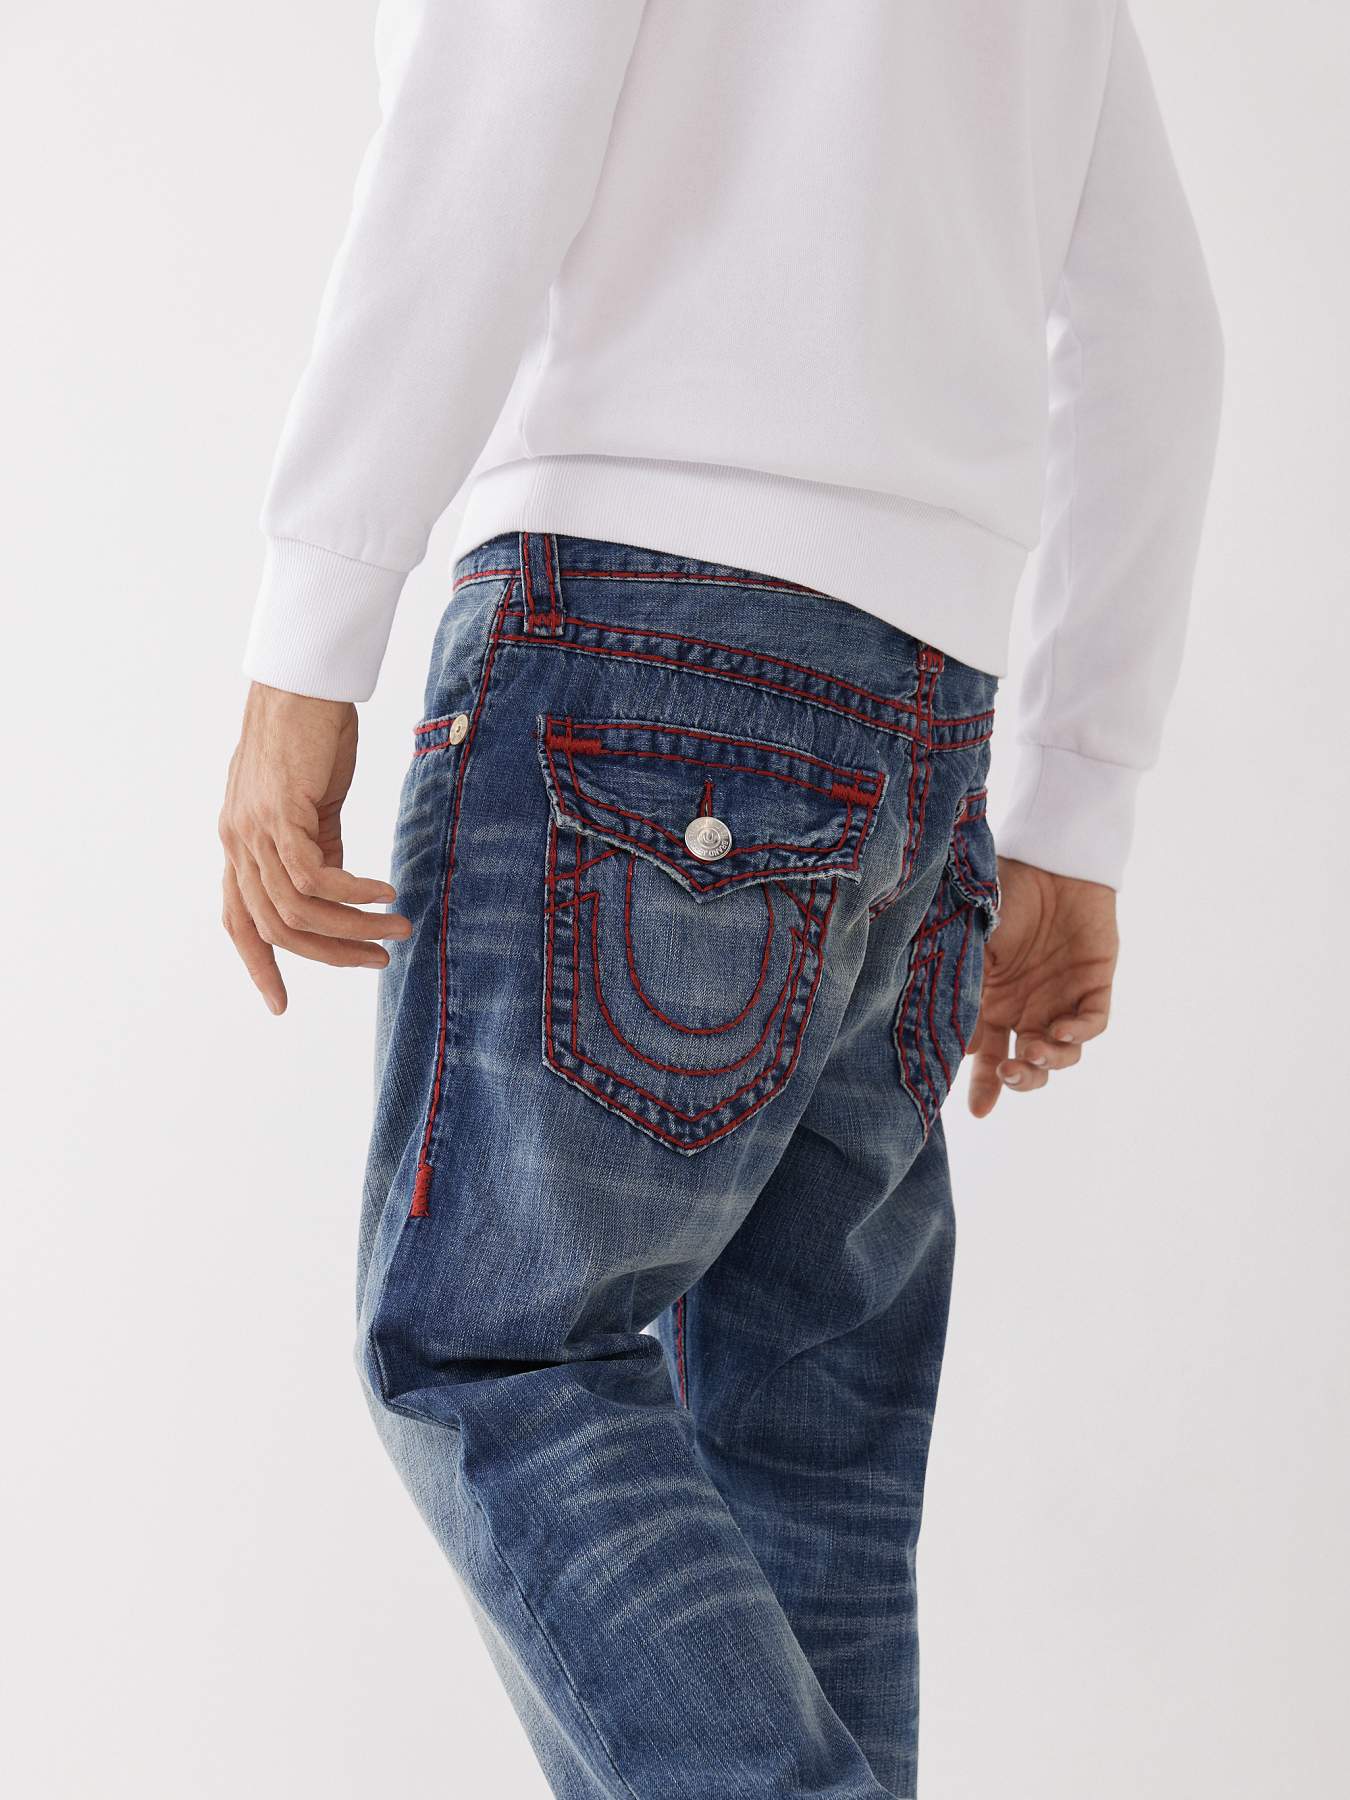 NWT True Religion Girls Big T Jeans, Size 10, Pink Stitching 